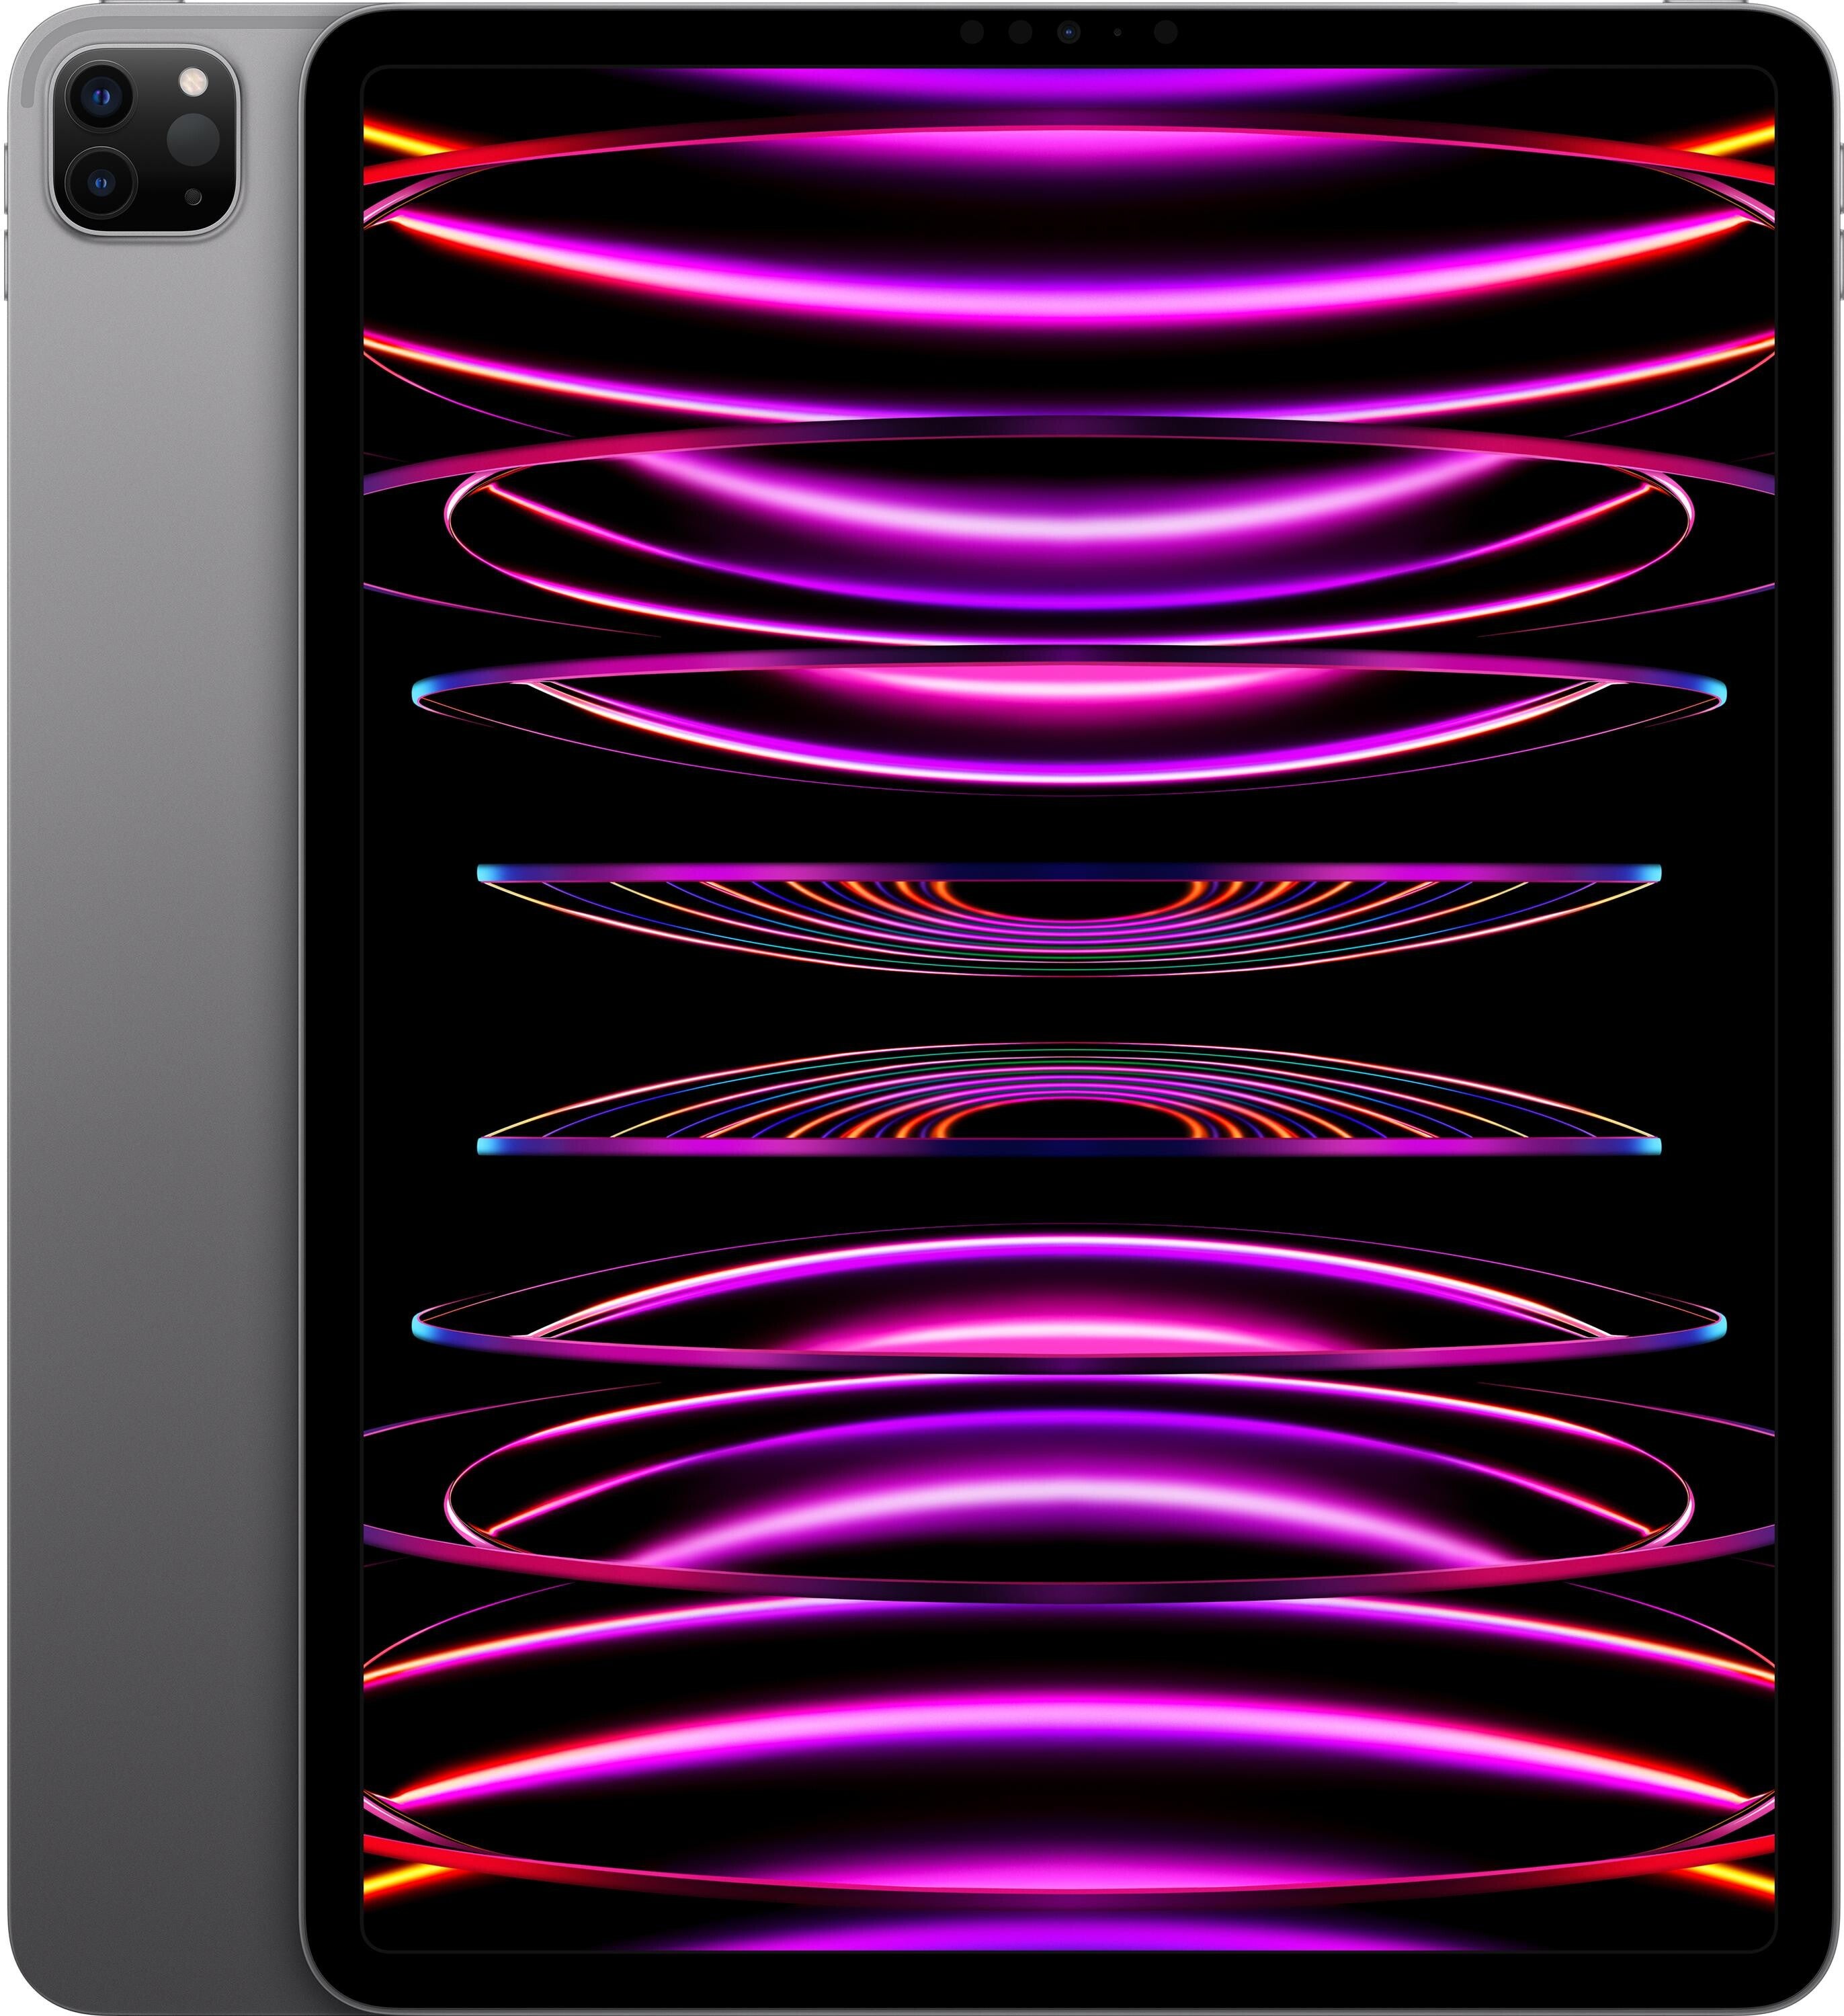 Apple iPad Pro 12.9-inch Wi-Fi + Cellular 256GB Silver | Sweetwater